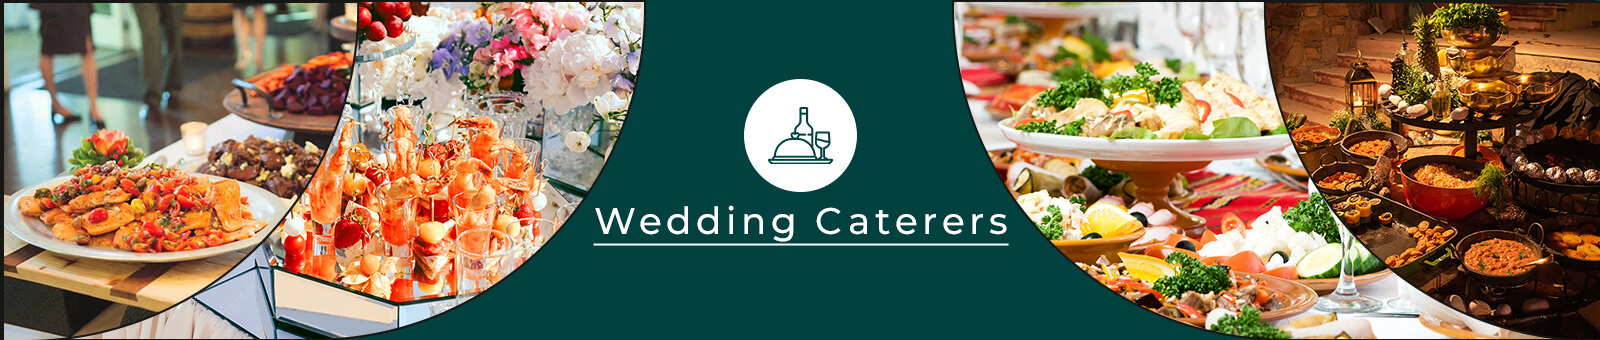 Best Wedding Caterers in Ludhiana